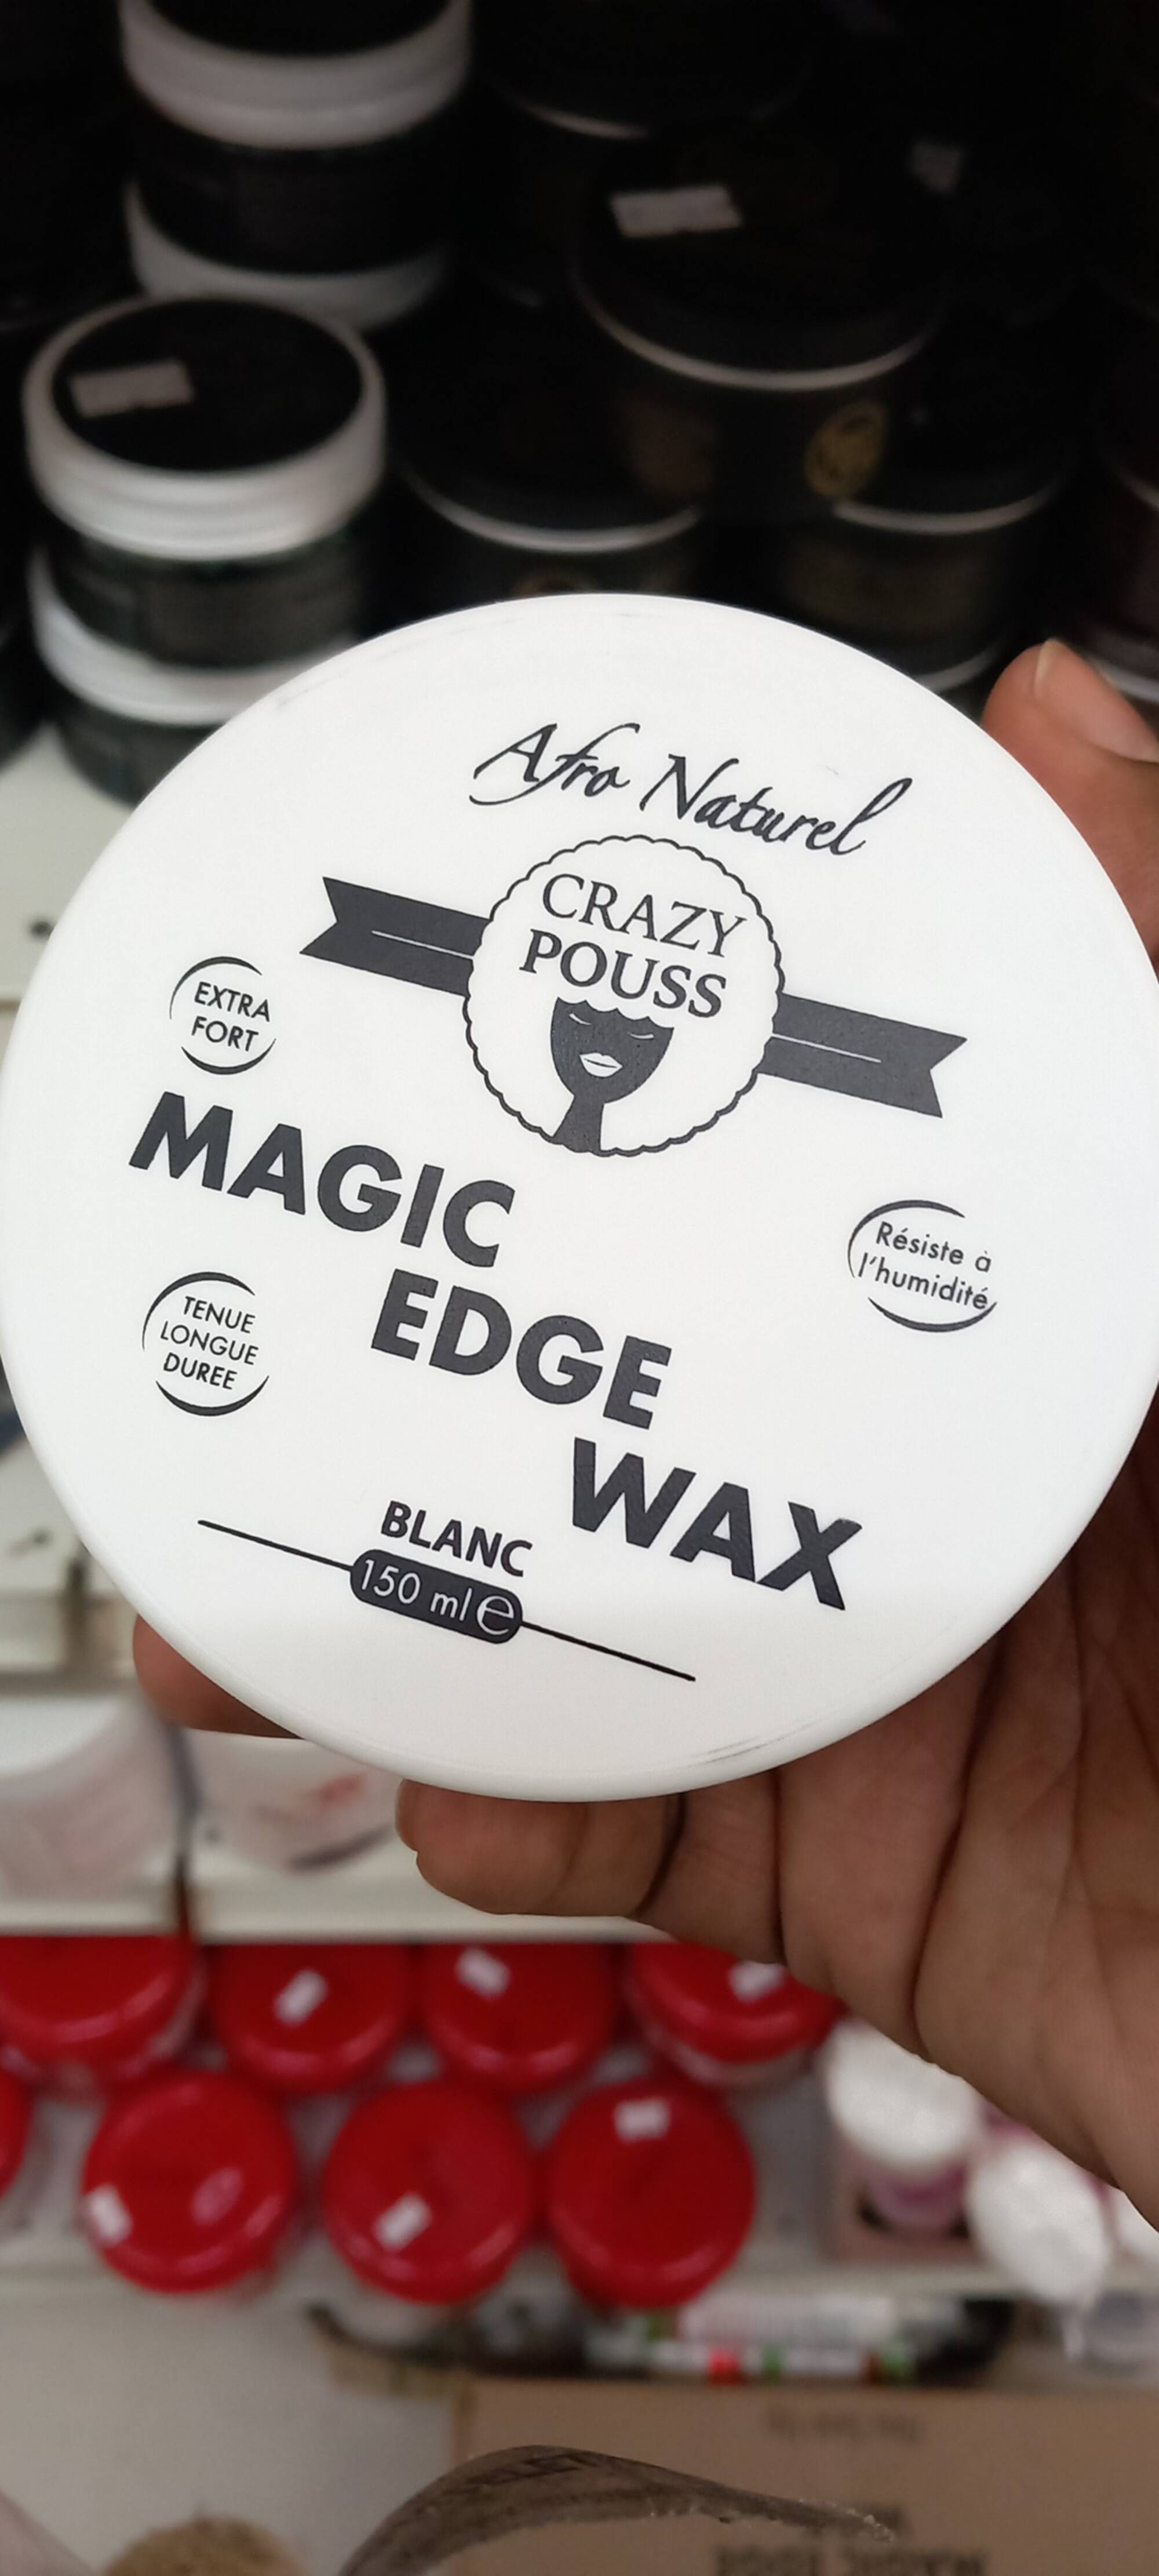 AFRO NATUREL - Crazy poss - Magic edge wax blanc